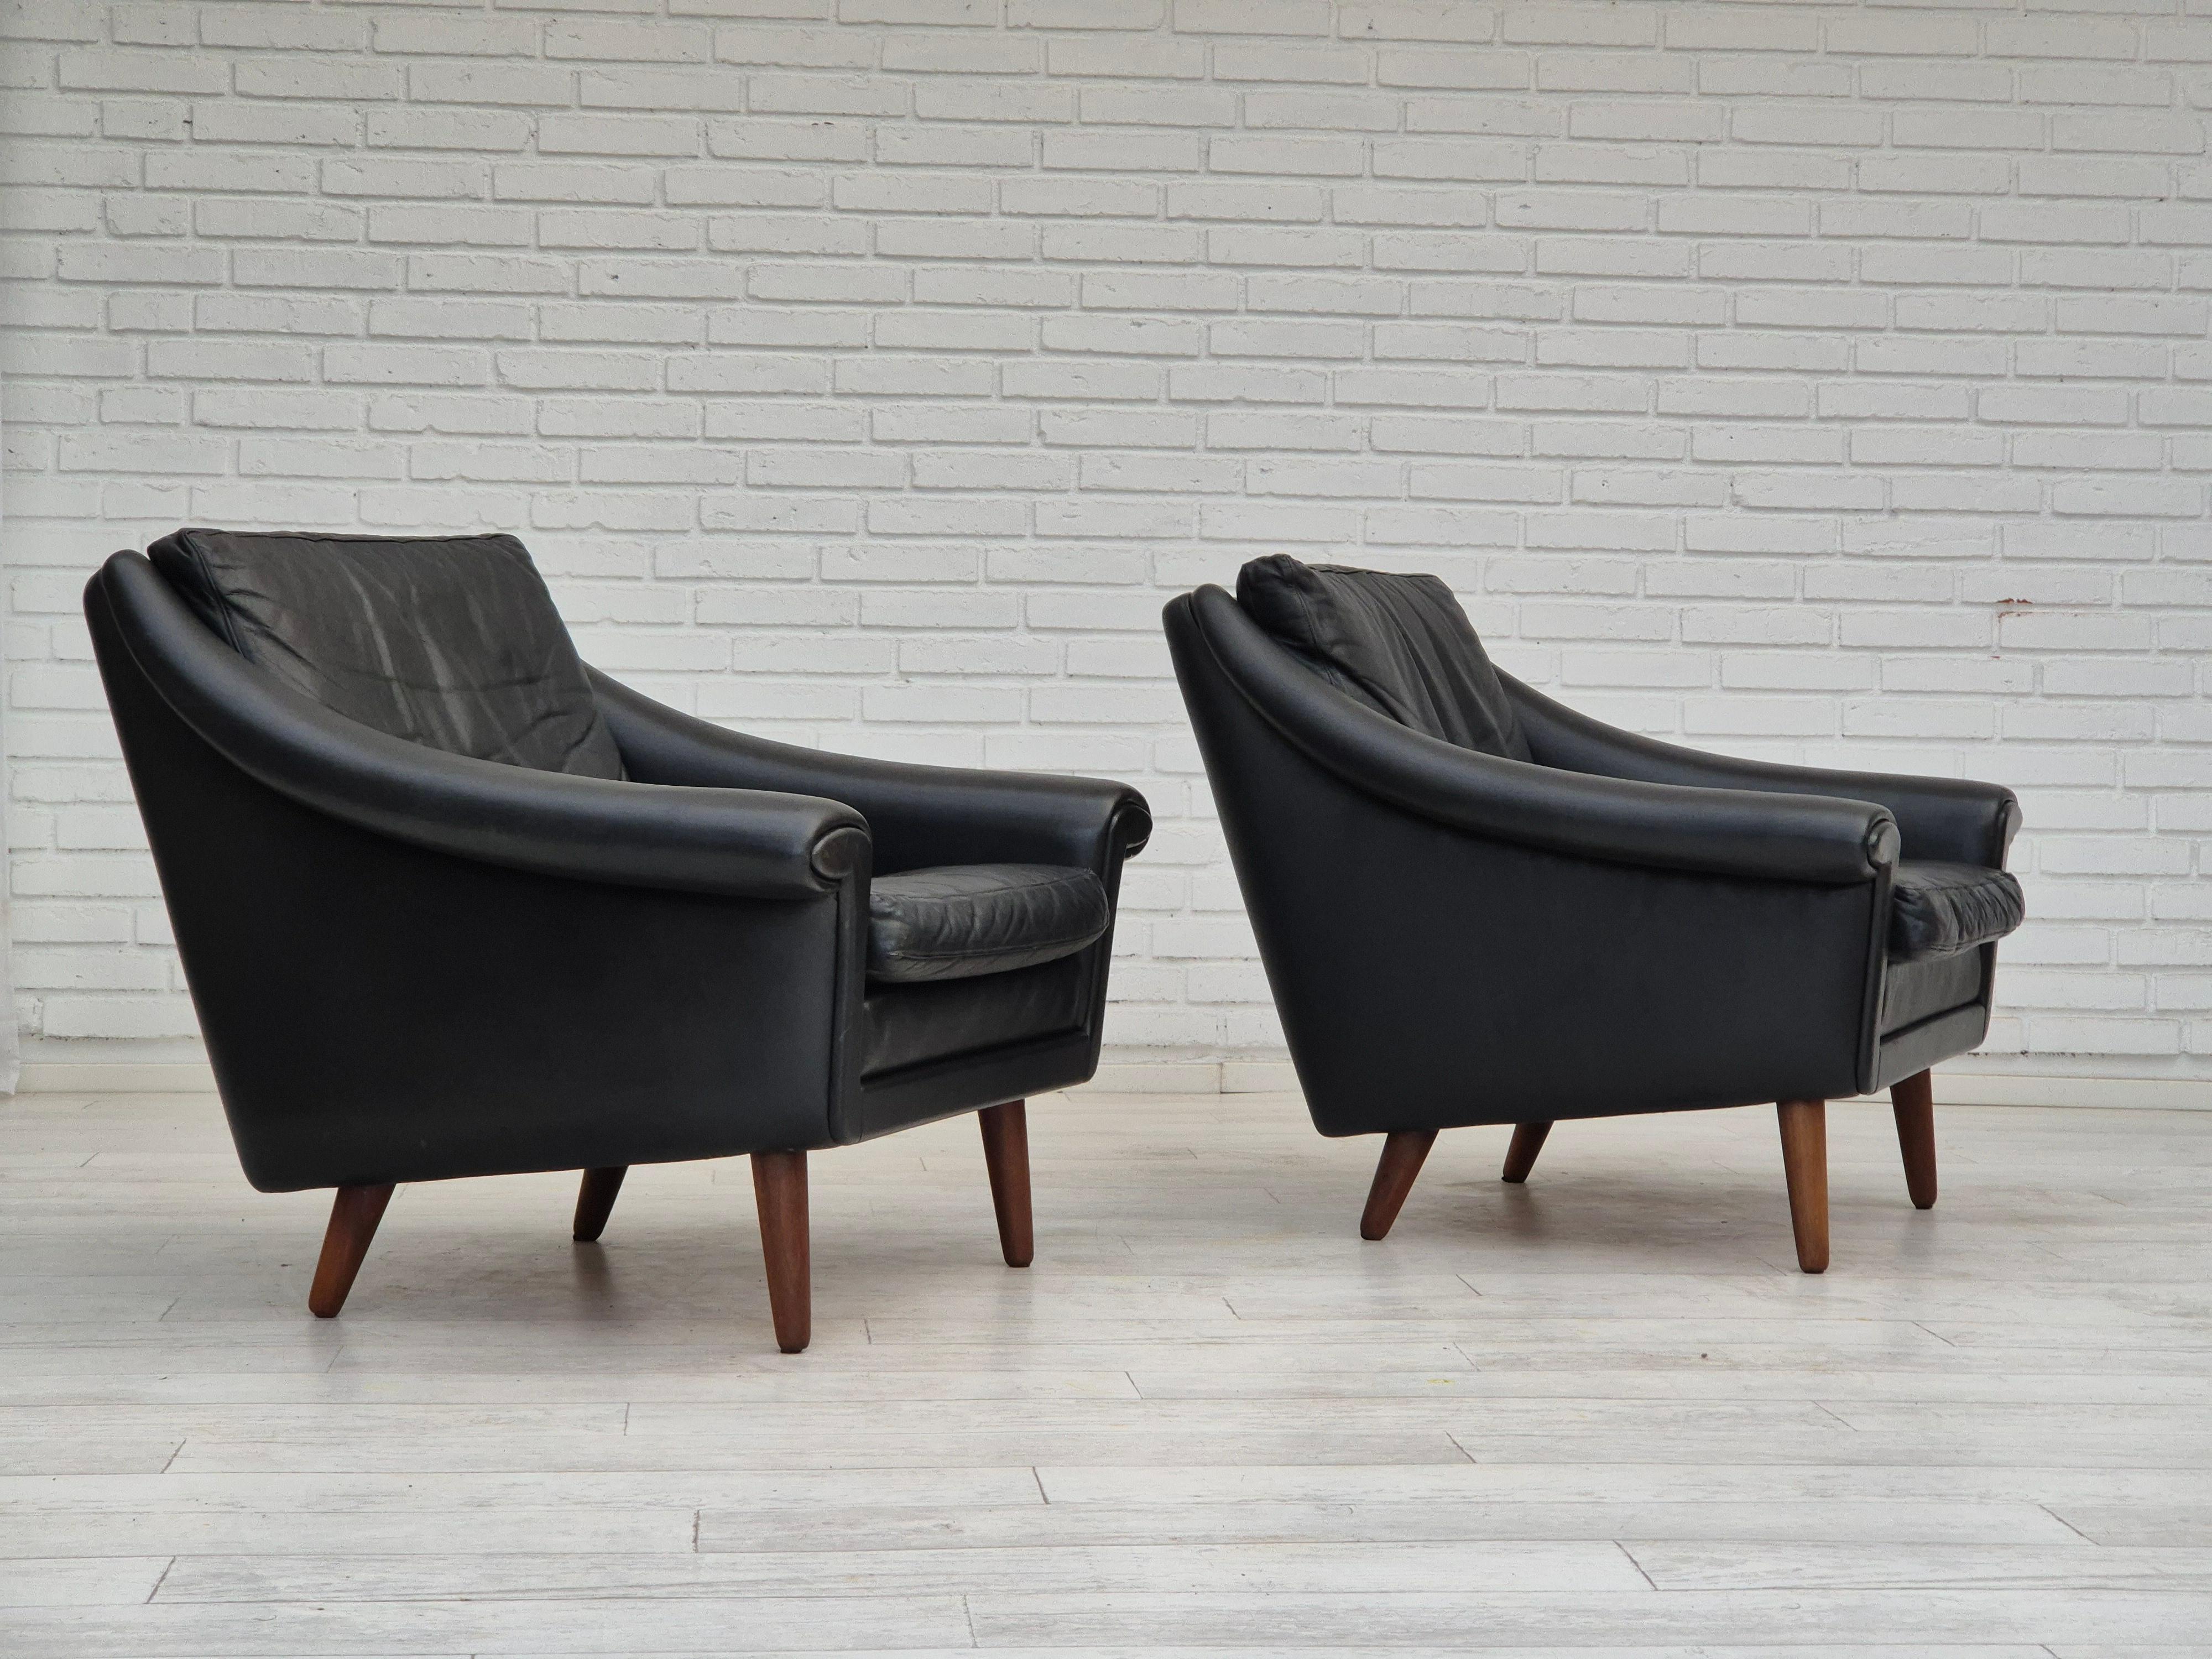 1960s, Danish design by Aage Christiansen for Erhardsen & Andersen, Nykøbing Mors. Pair of two lounge chairs model 